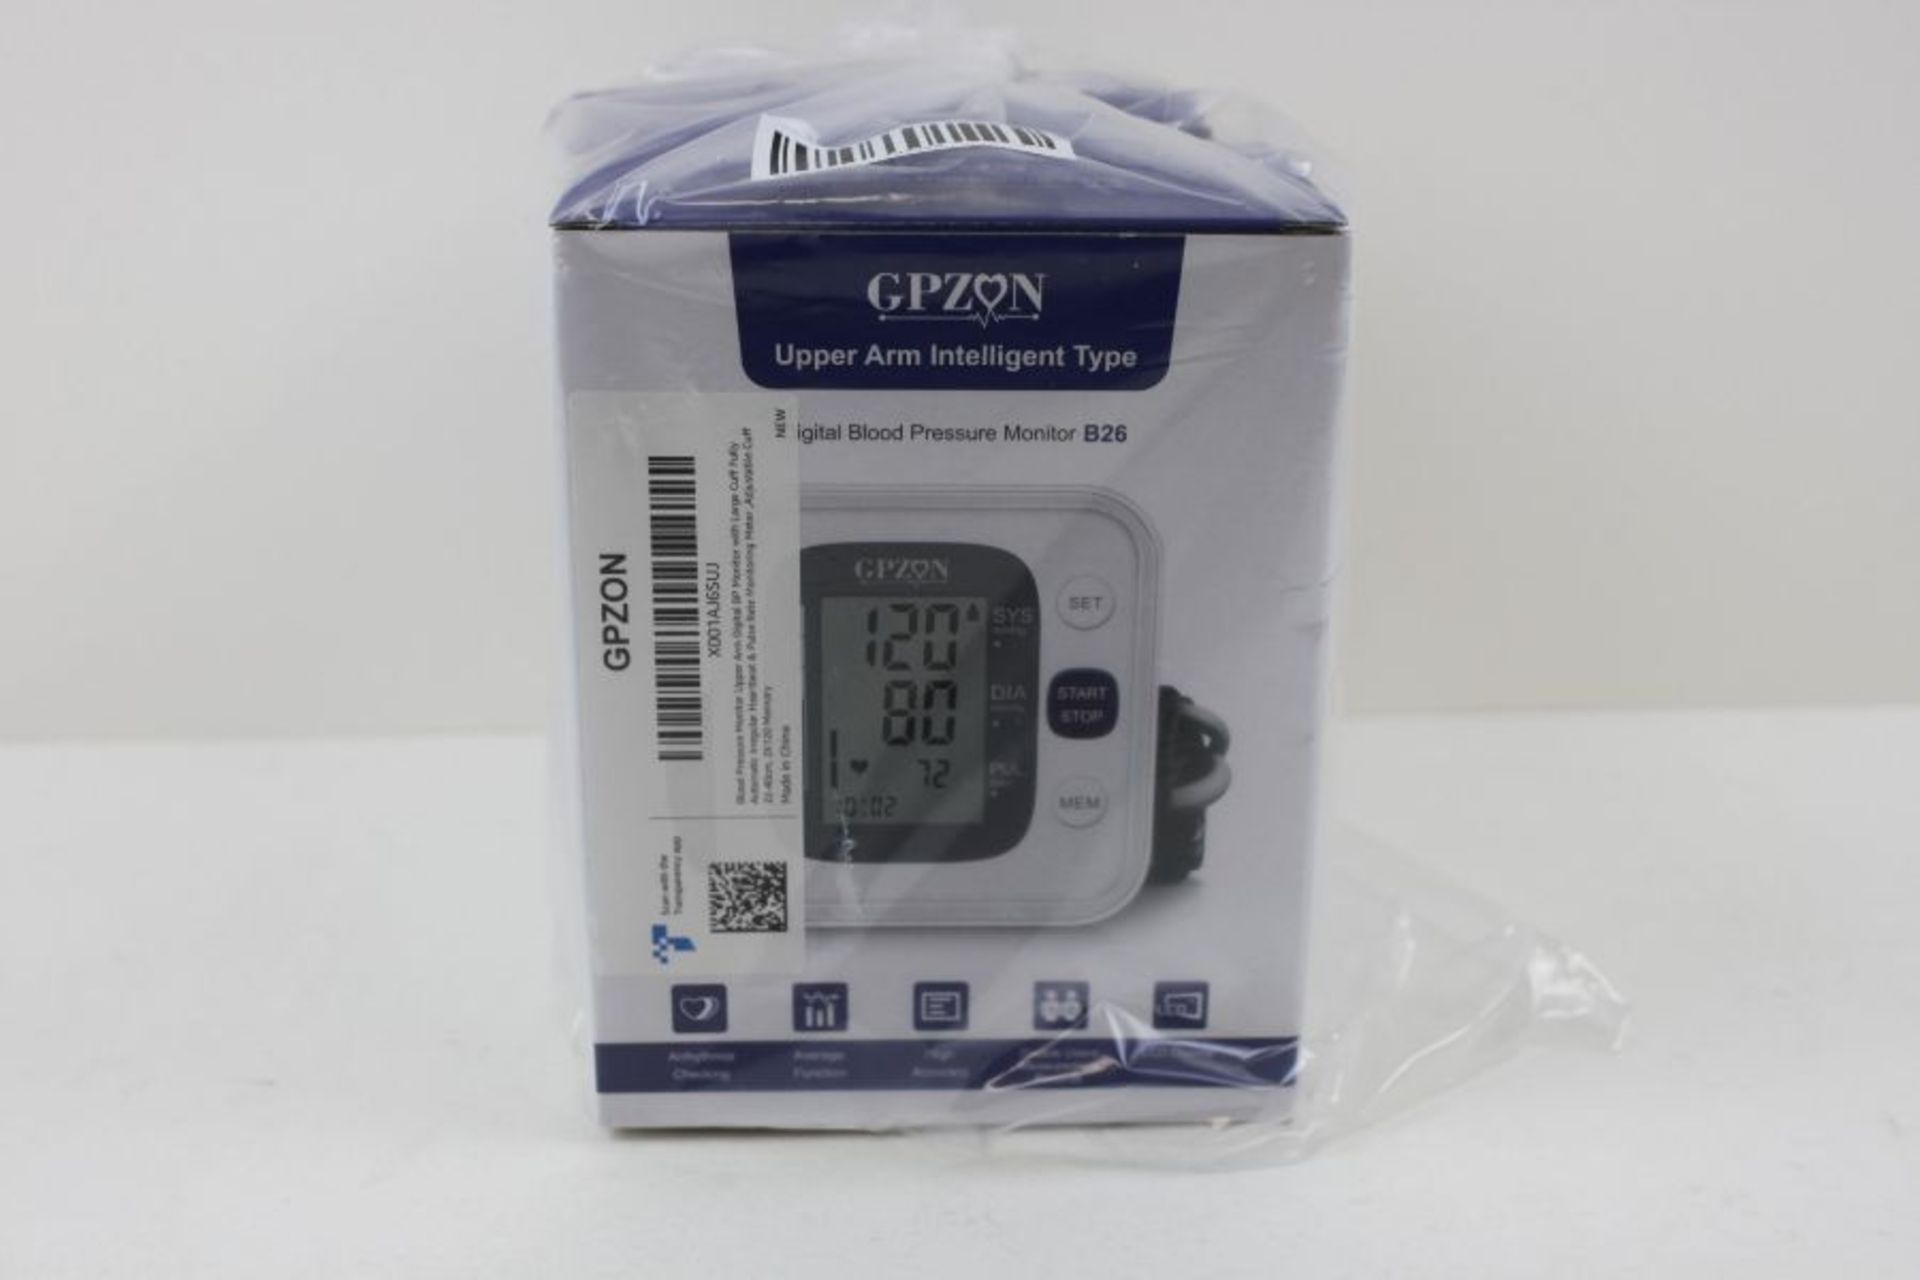 Thirty Gpzon B26 upper Arm Intelligent Type Digital Blood Pressure Monitors